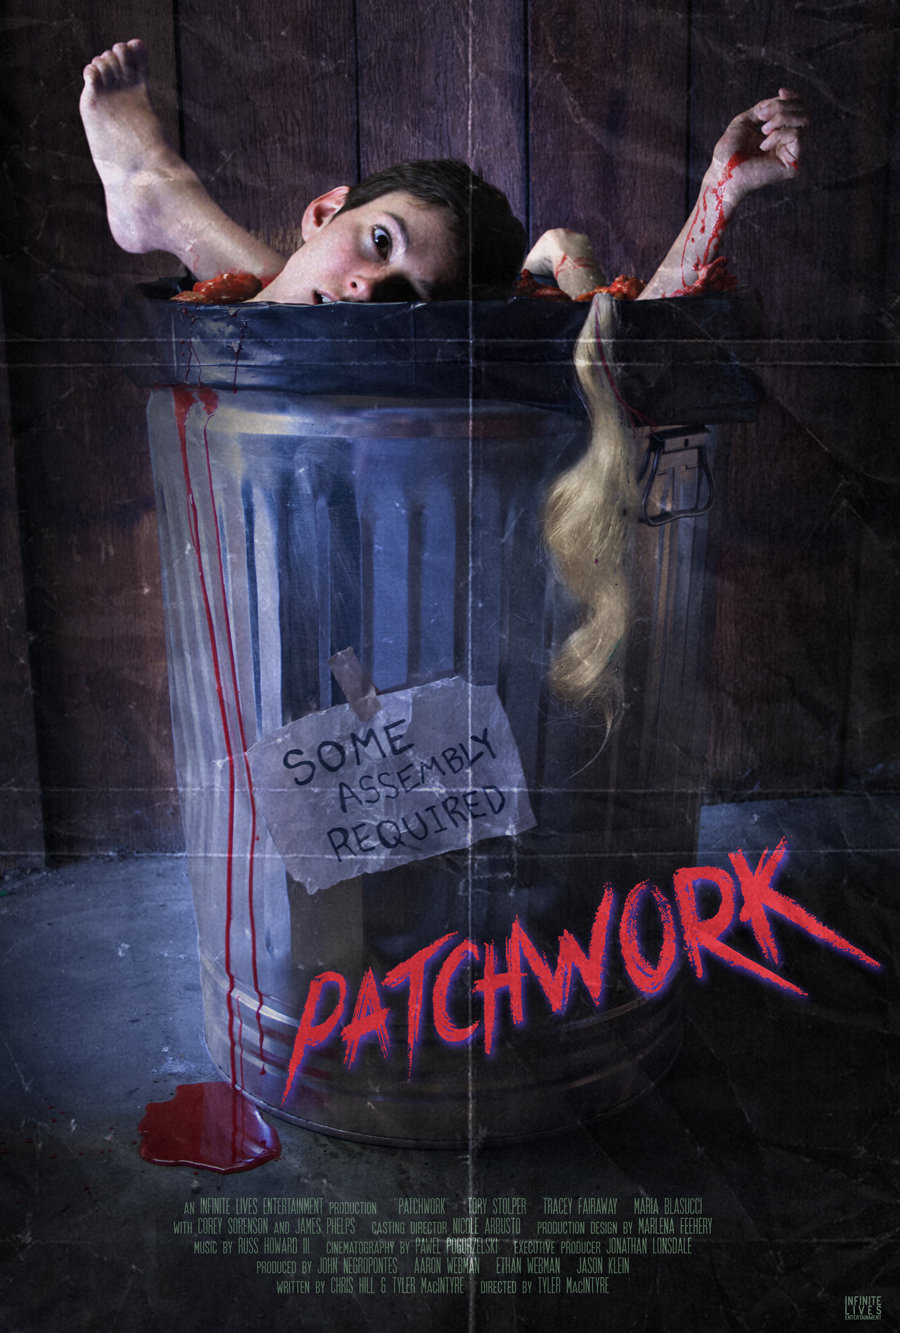 Nonton film Patchwork layarkaca21 indoxx1 ganool online streaming terbaru